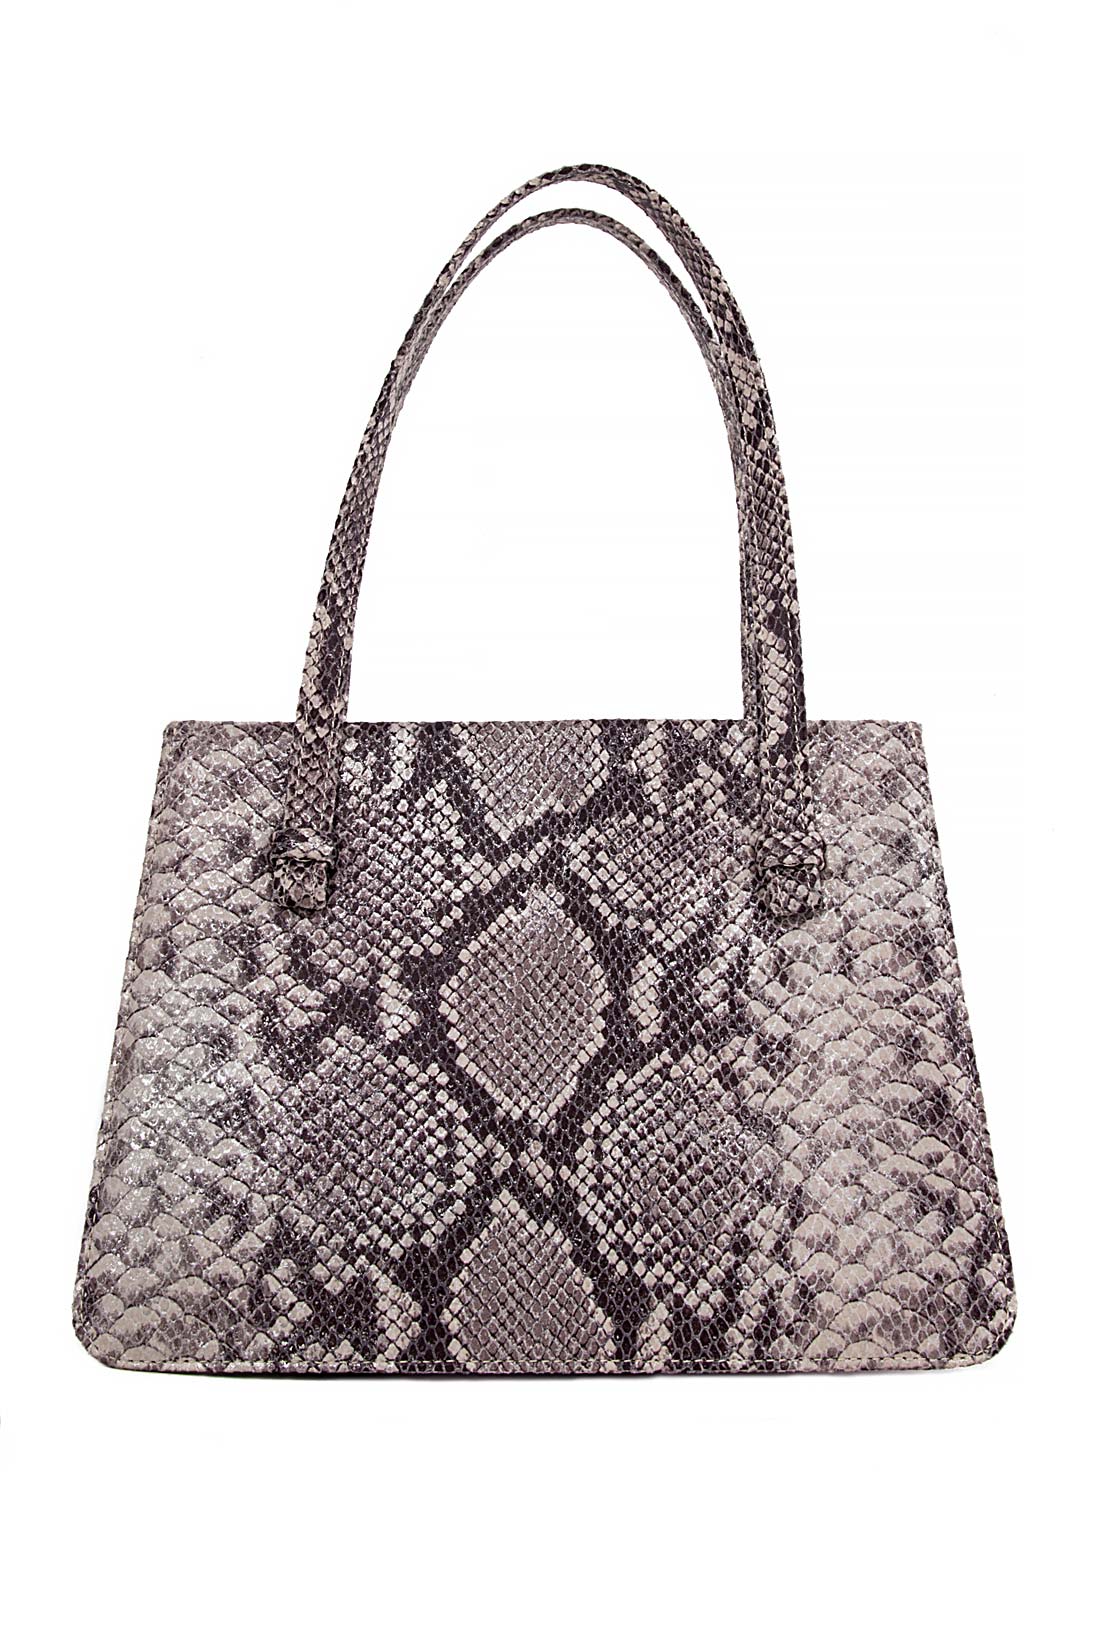 Snake-print leather bag Laura Olaru image 0